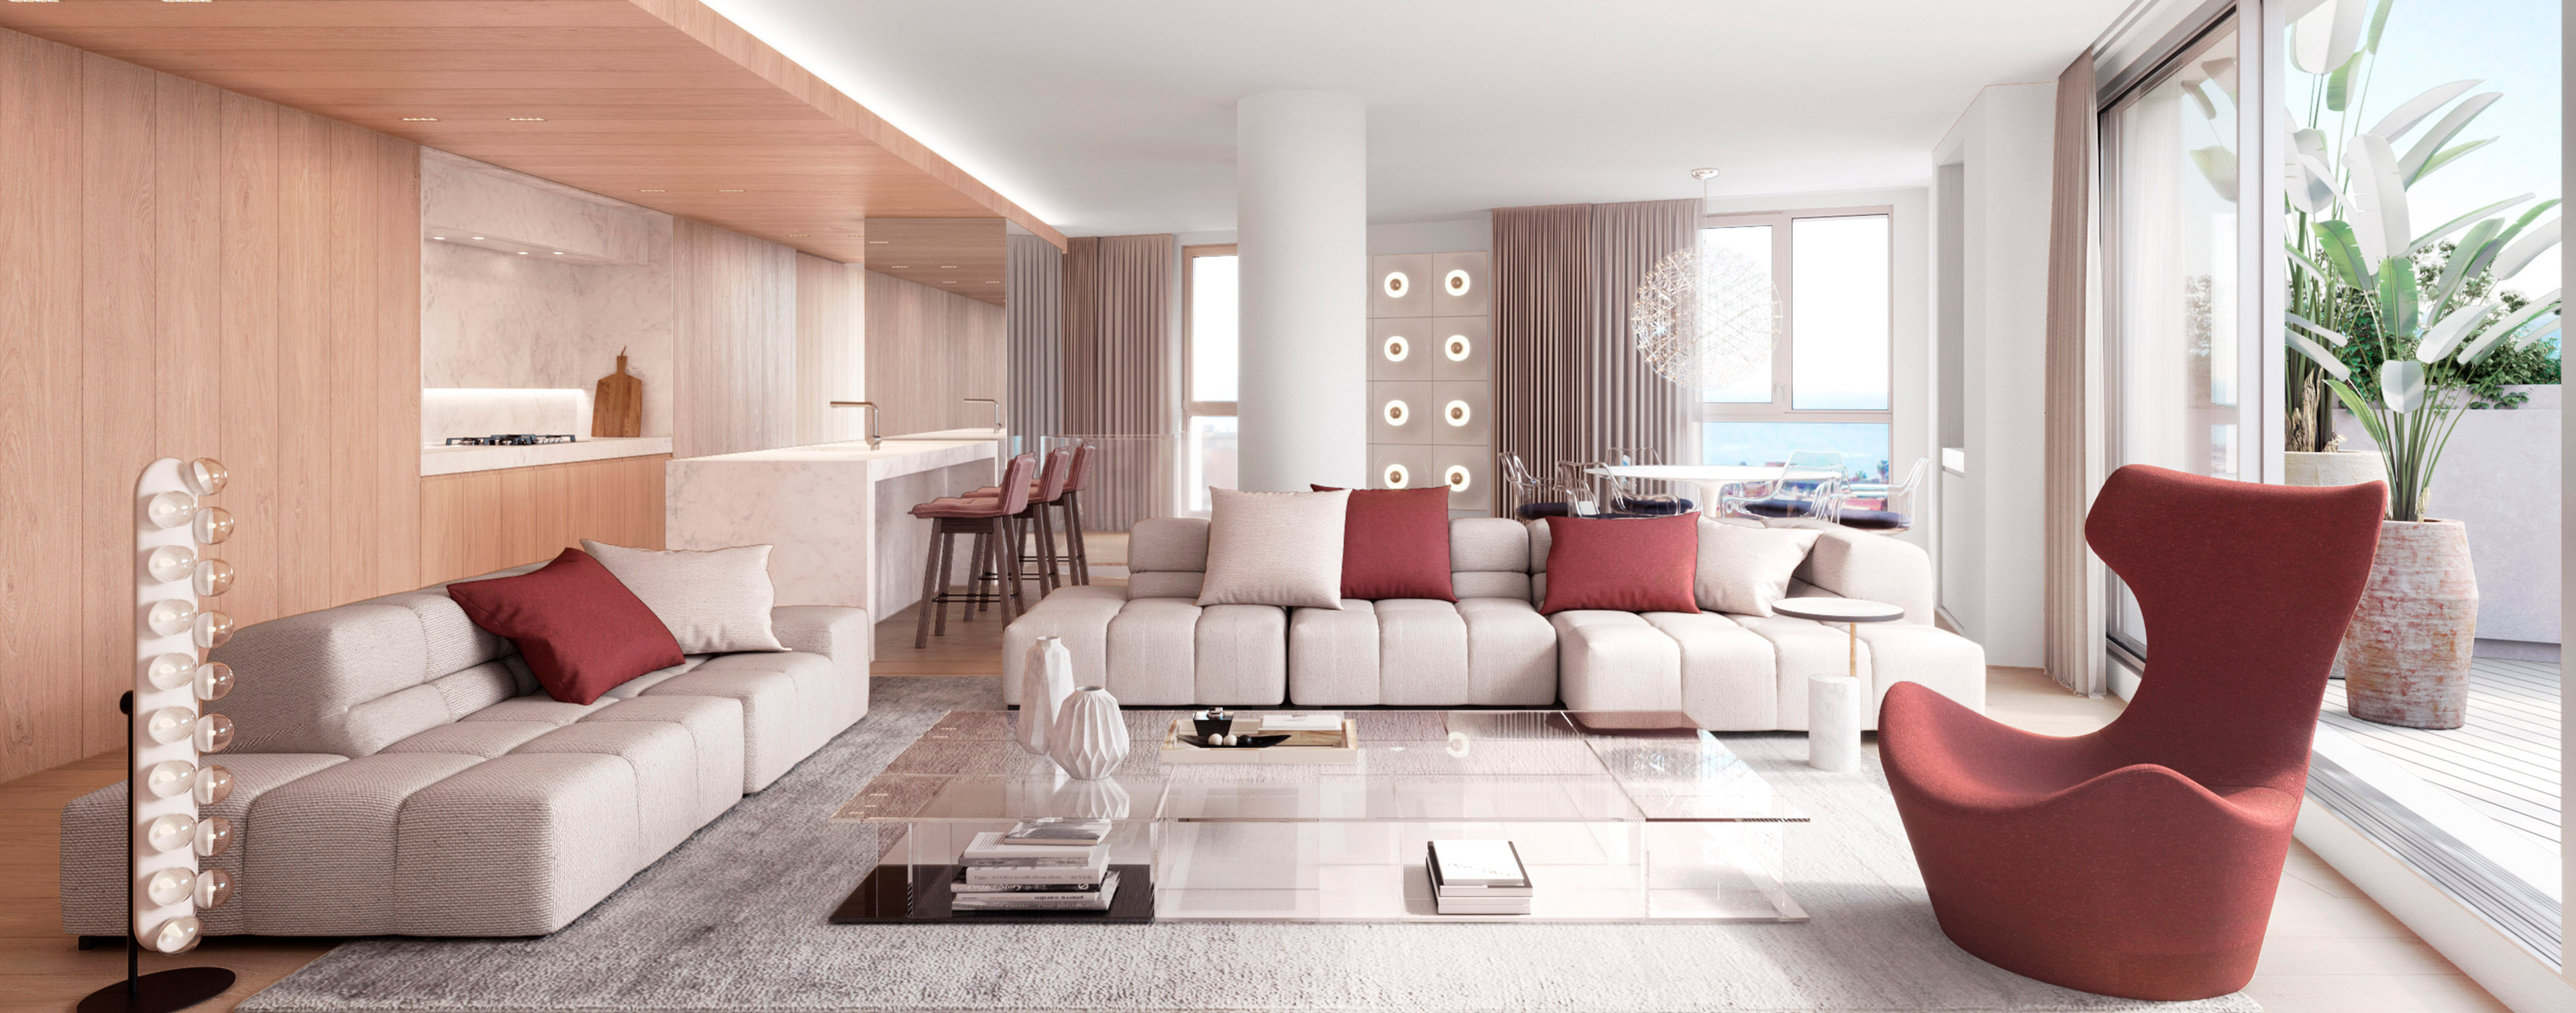 luv studio luxury architects barcelona dr aiguader penthouse IMG 01 - LUV Studio - Arquitectura y diseño - Barcelona